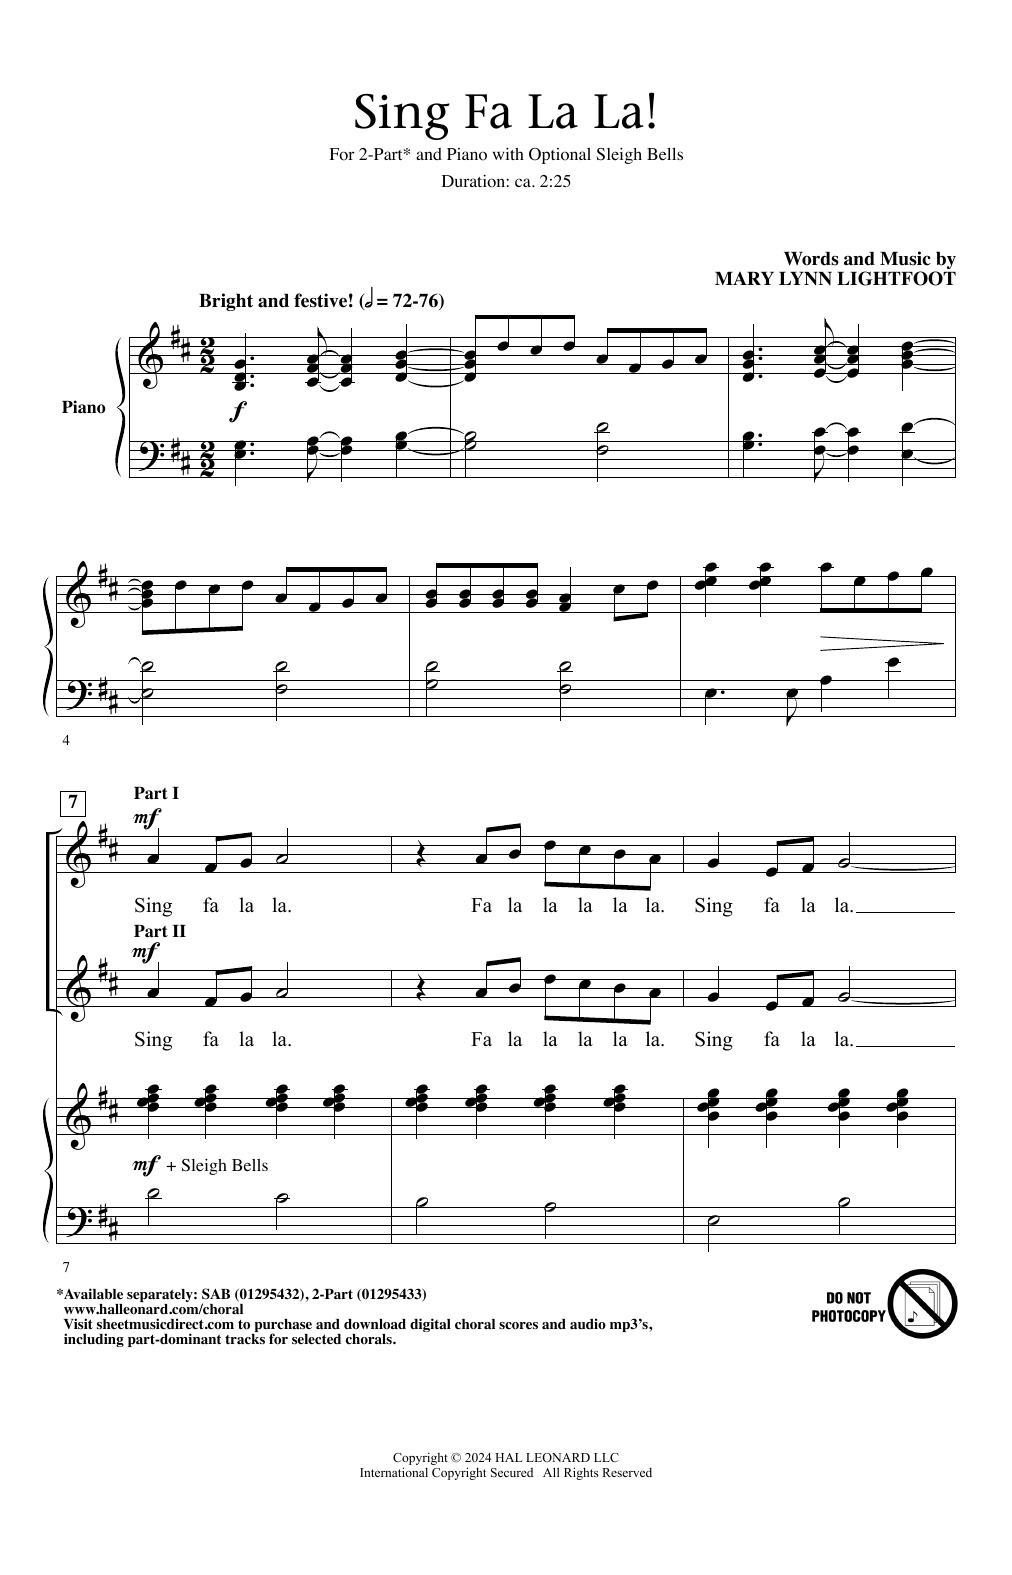 Mary Lynn Lightfoot Sing Fa La La! Sheet Music Notes & Chords for 2-Part Choir - Download or Print PDF